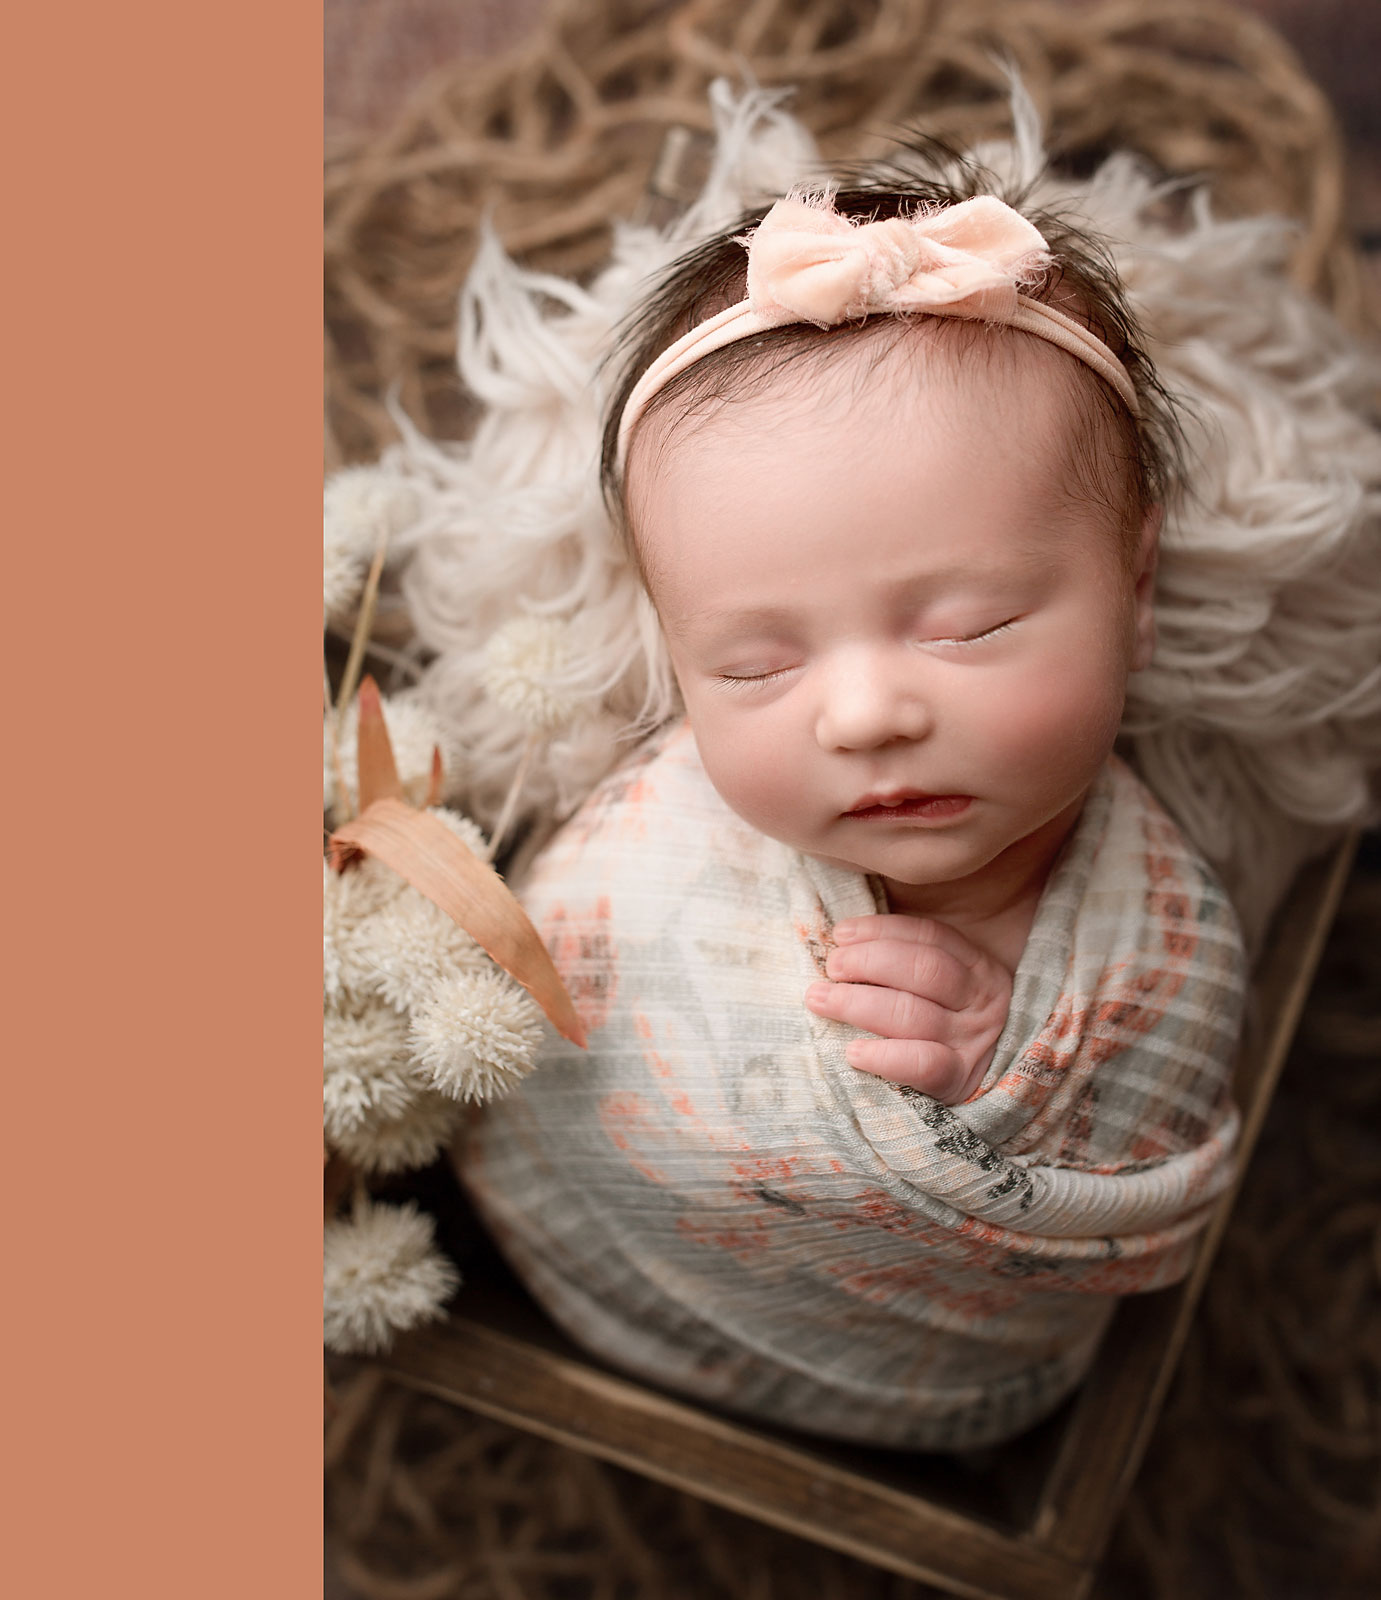 lambertville newborn photo session 